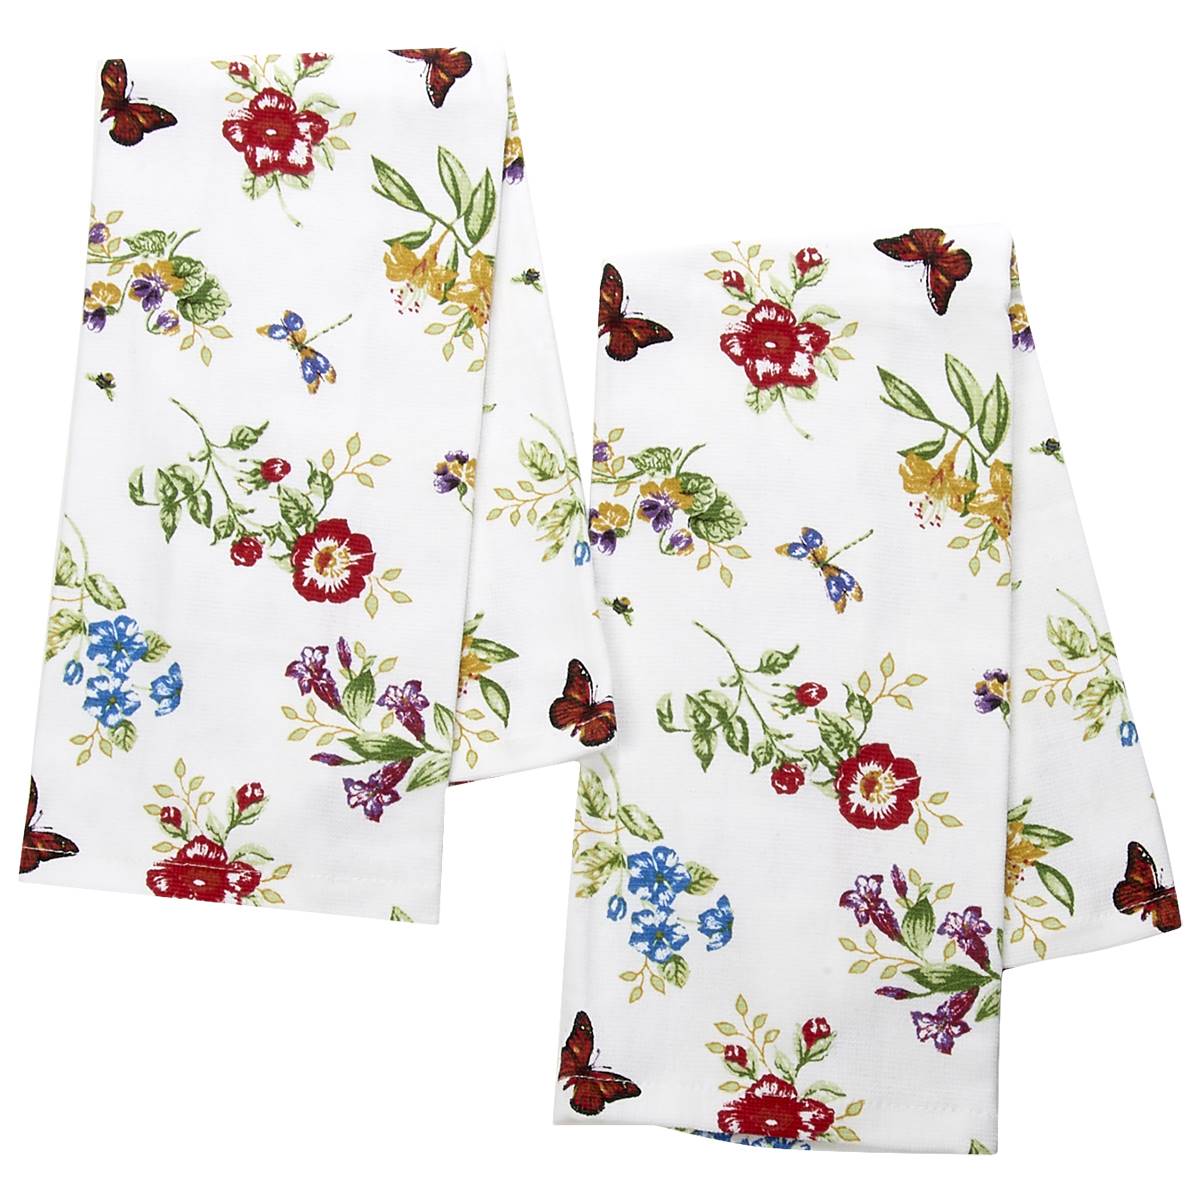 Lenox(R) 2-pack Butterfly Meadow(R) Kitchen Towels